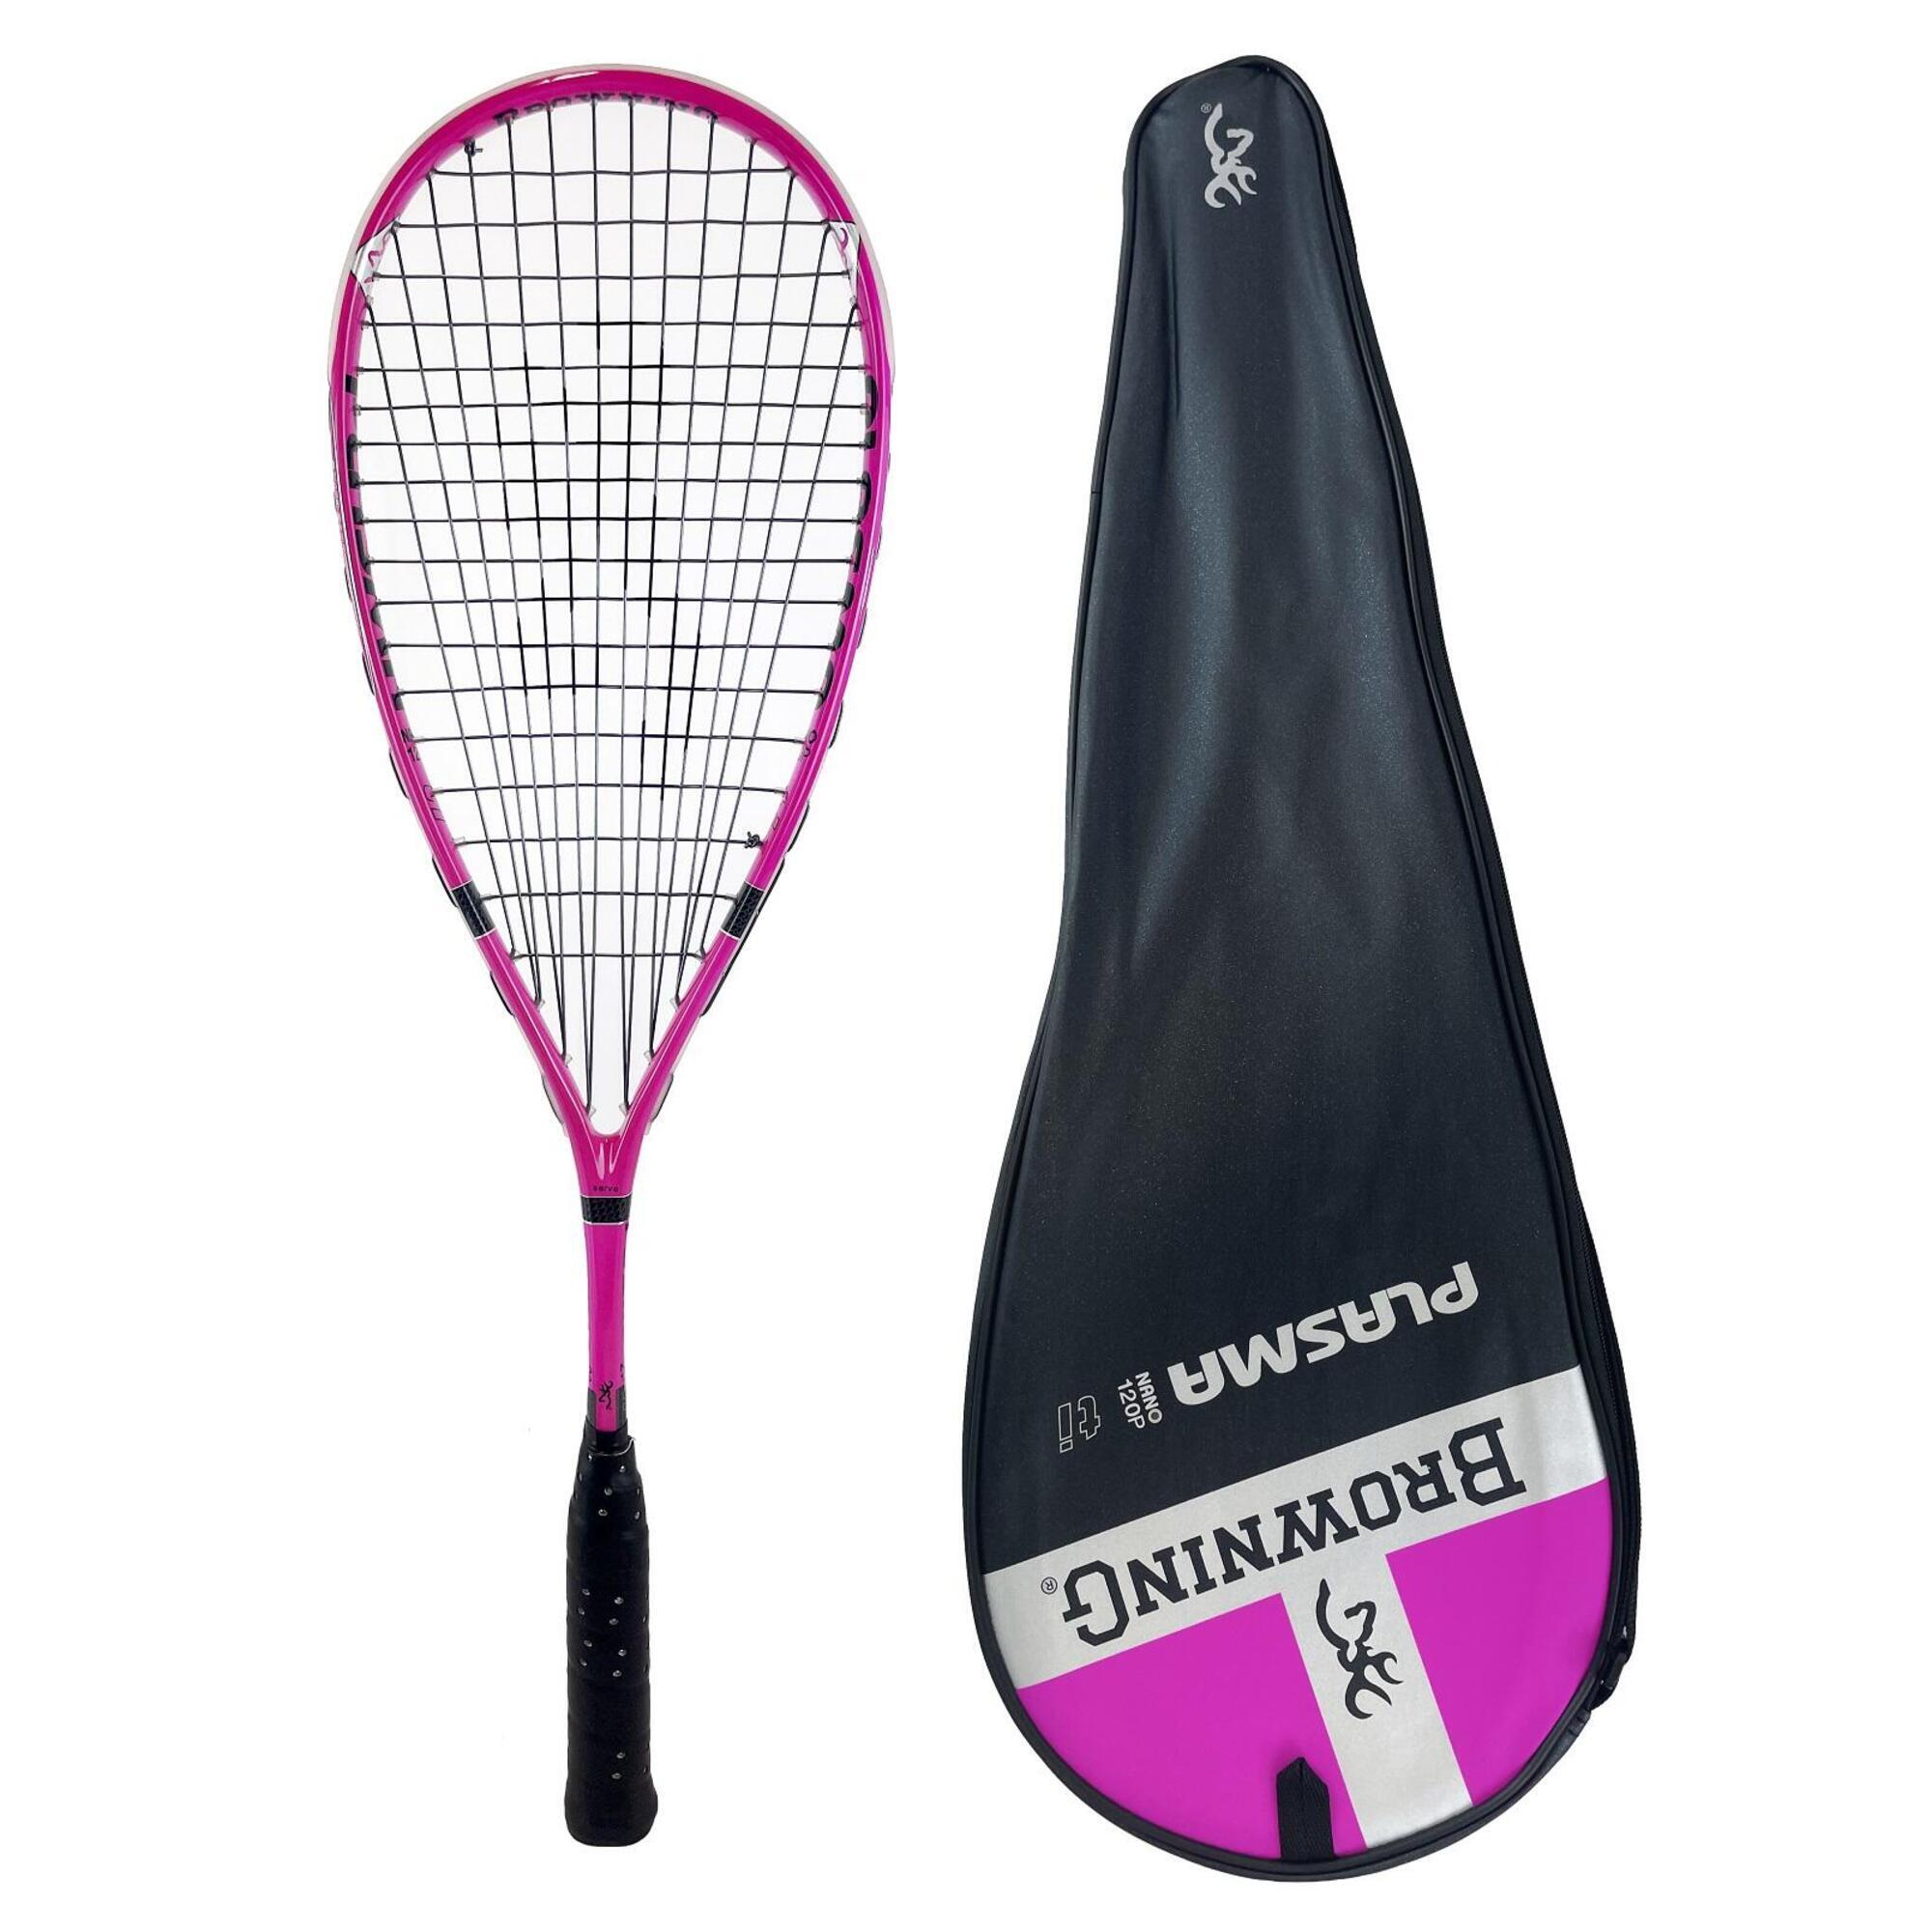 Browning Exocet Badminton Racquet 